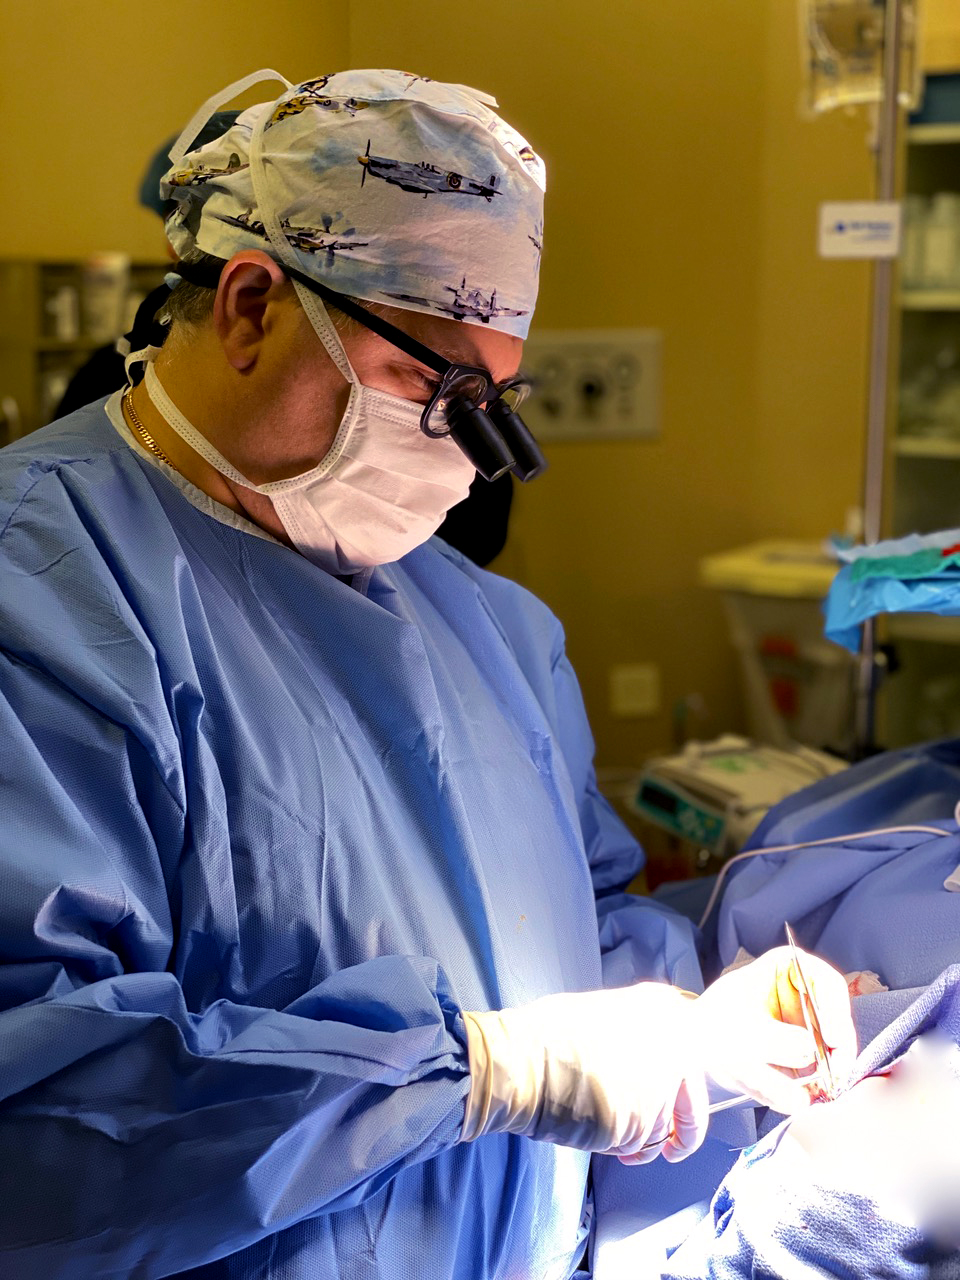 Evan Sorokin, MD - Delaware Valley Plastic Surgery Photo